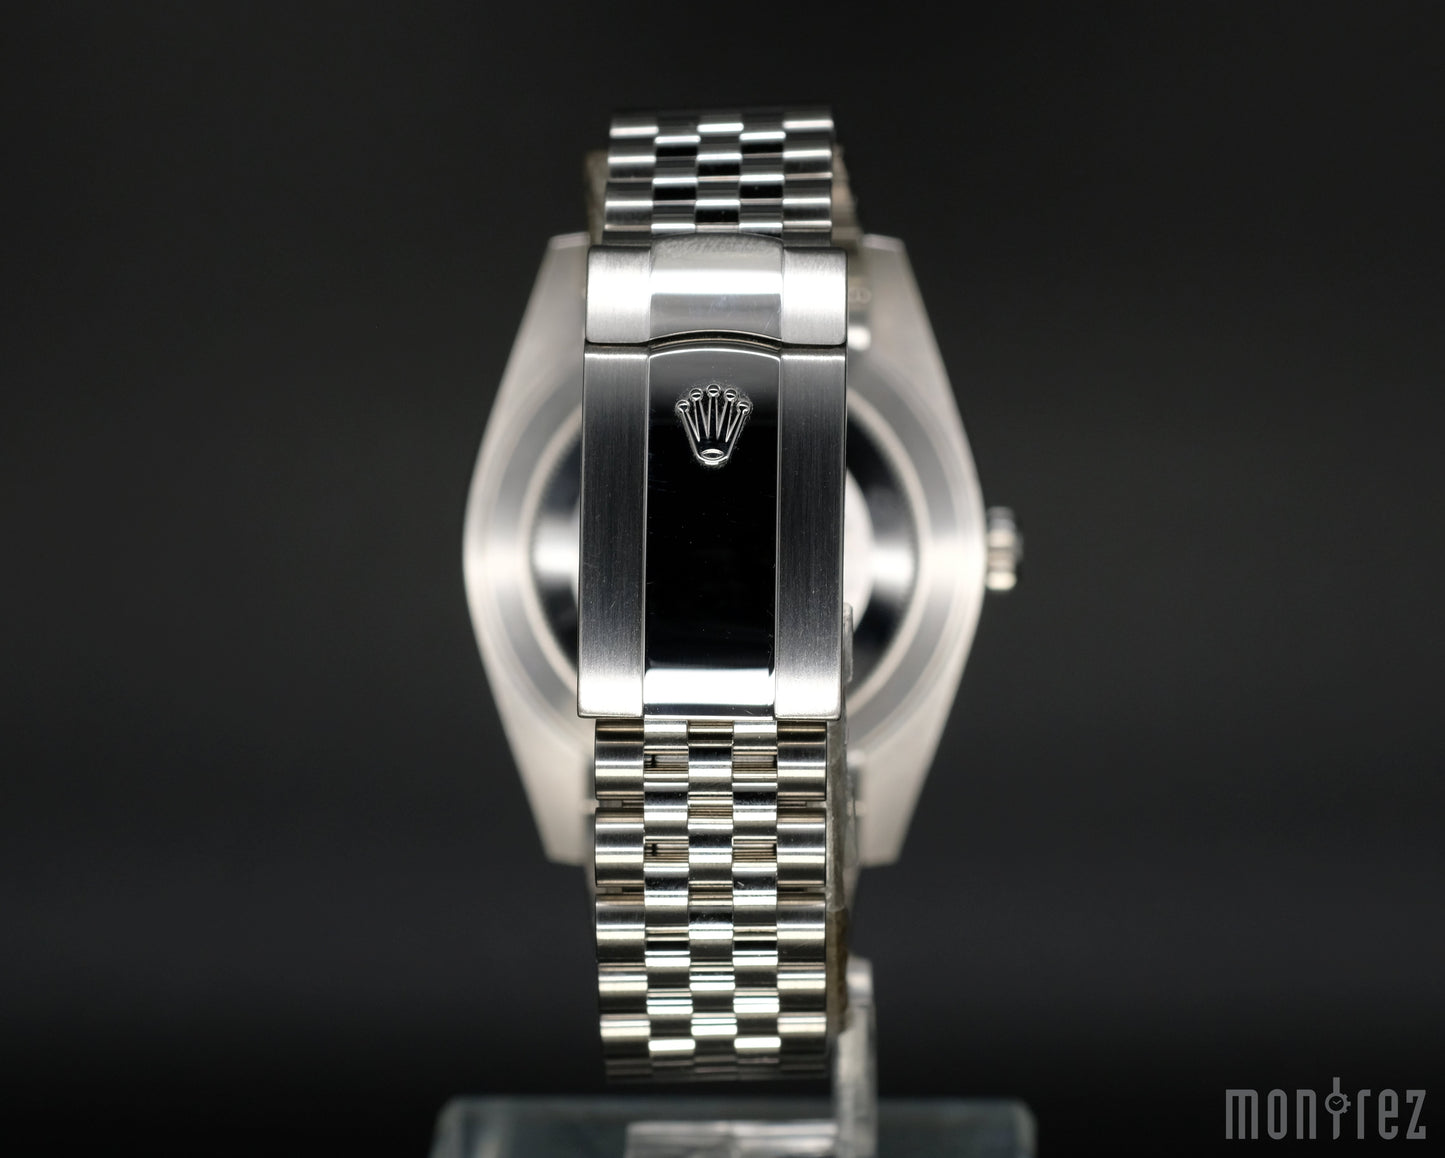 [Pre-Owned Watch] Rolex Datejust 41mm 126334 Blue Index Dial (Jubilee Bracelet) (888)